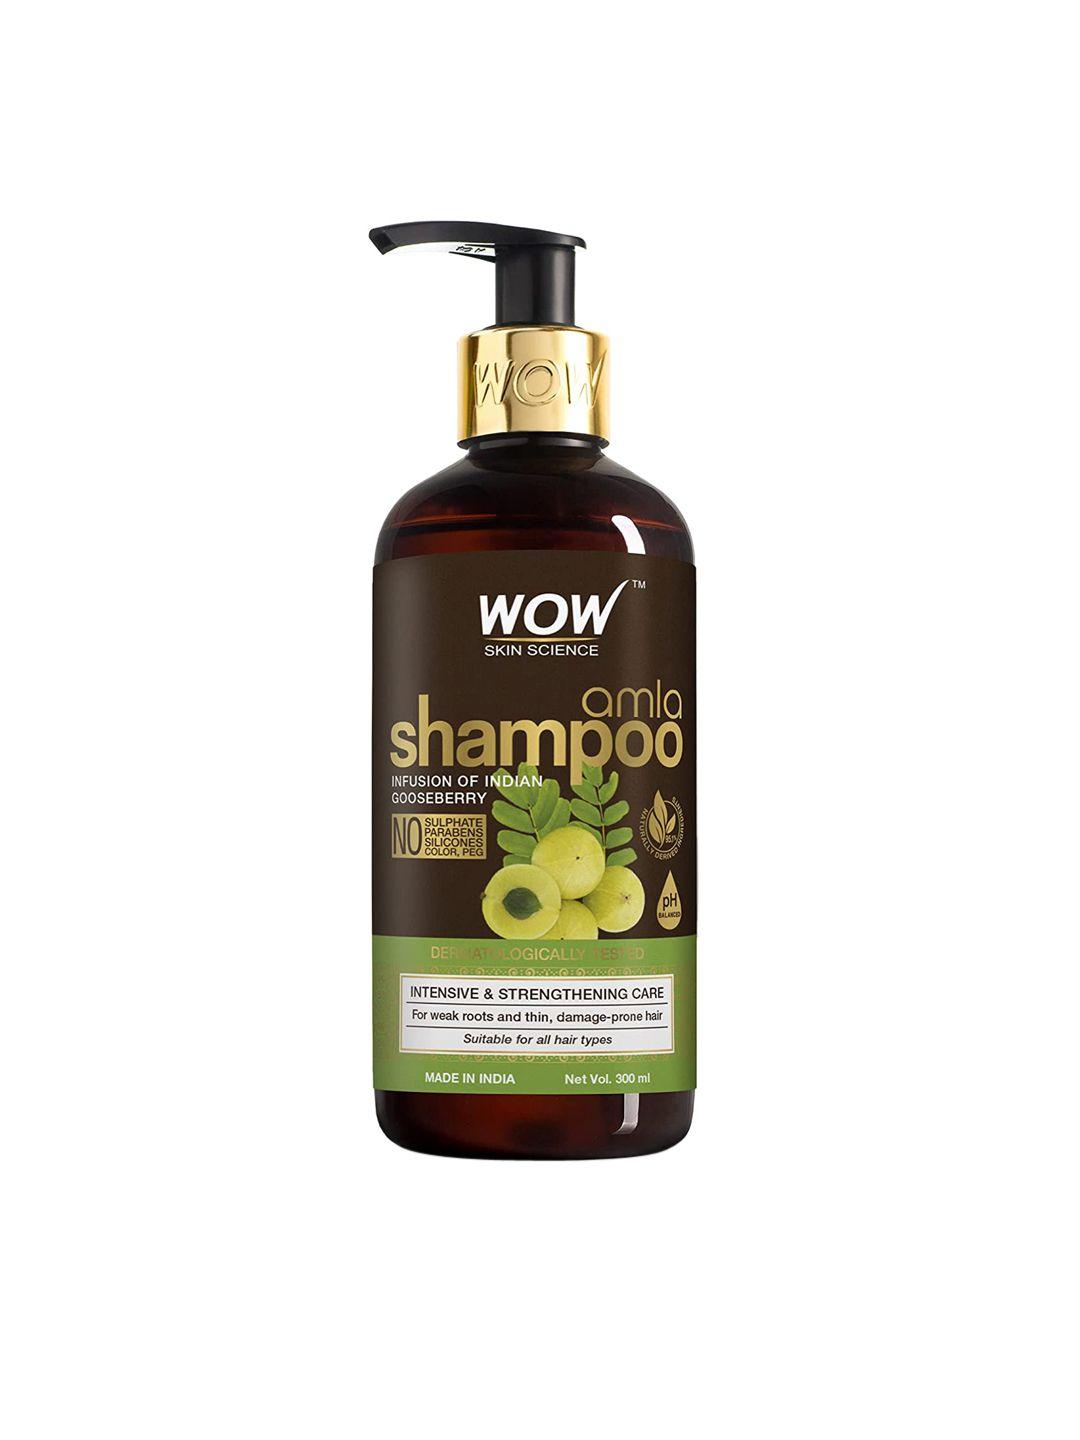 wow skin science amla shampoo for weak hair - 300ml